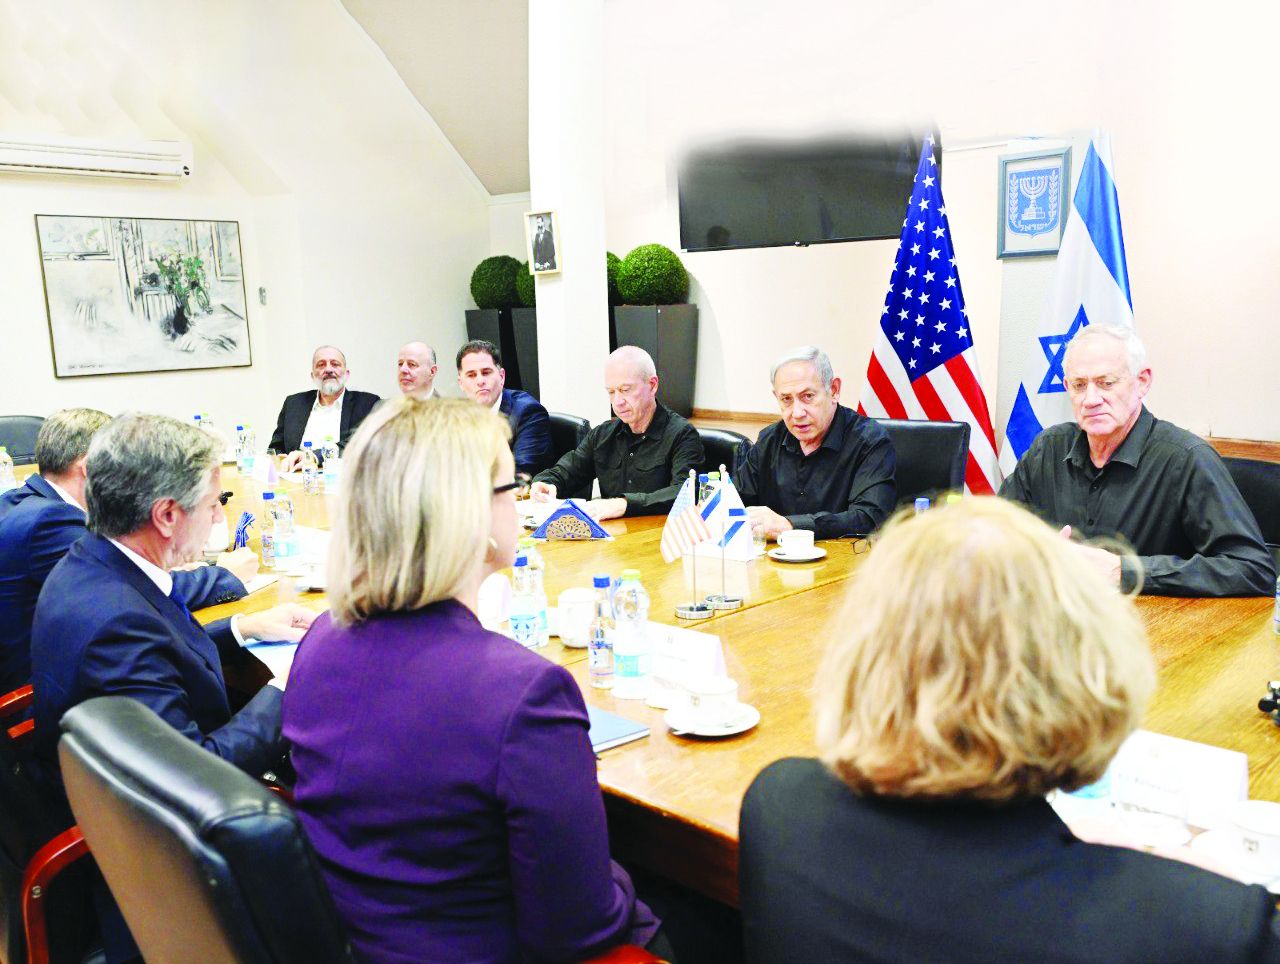 Civil war spread to the cabinet in Israeli regime